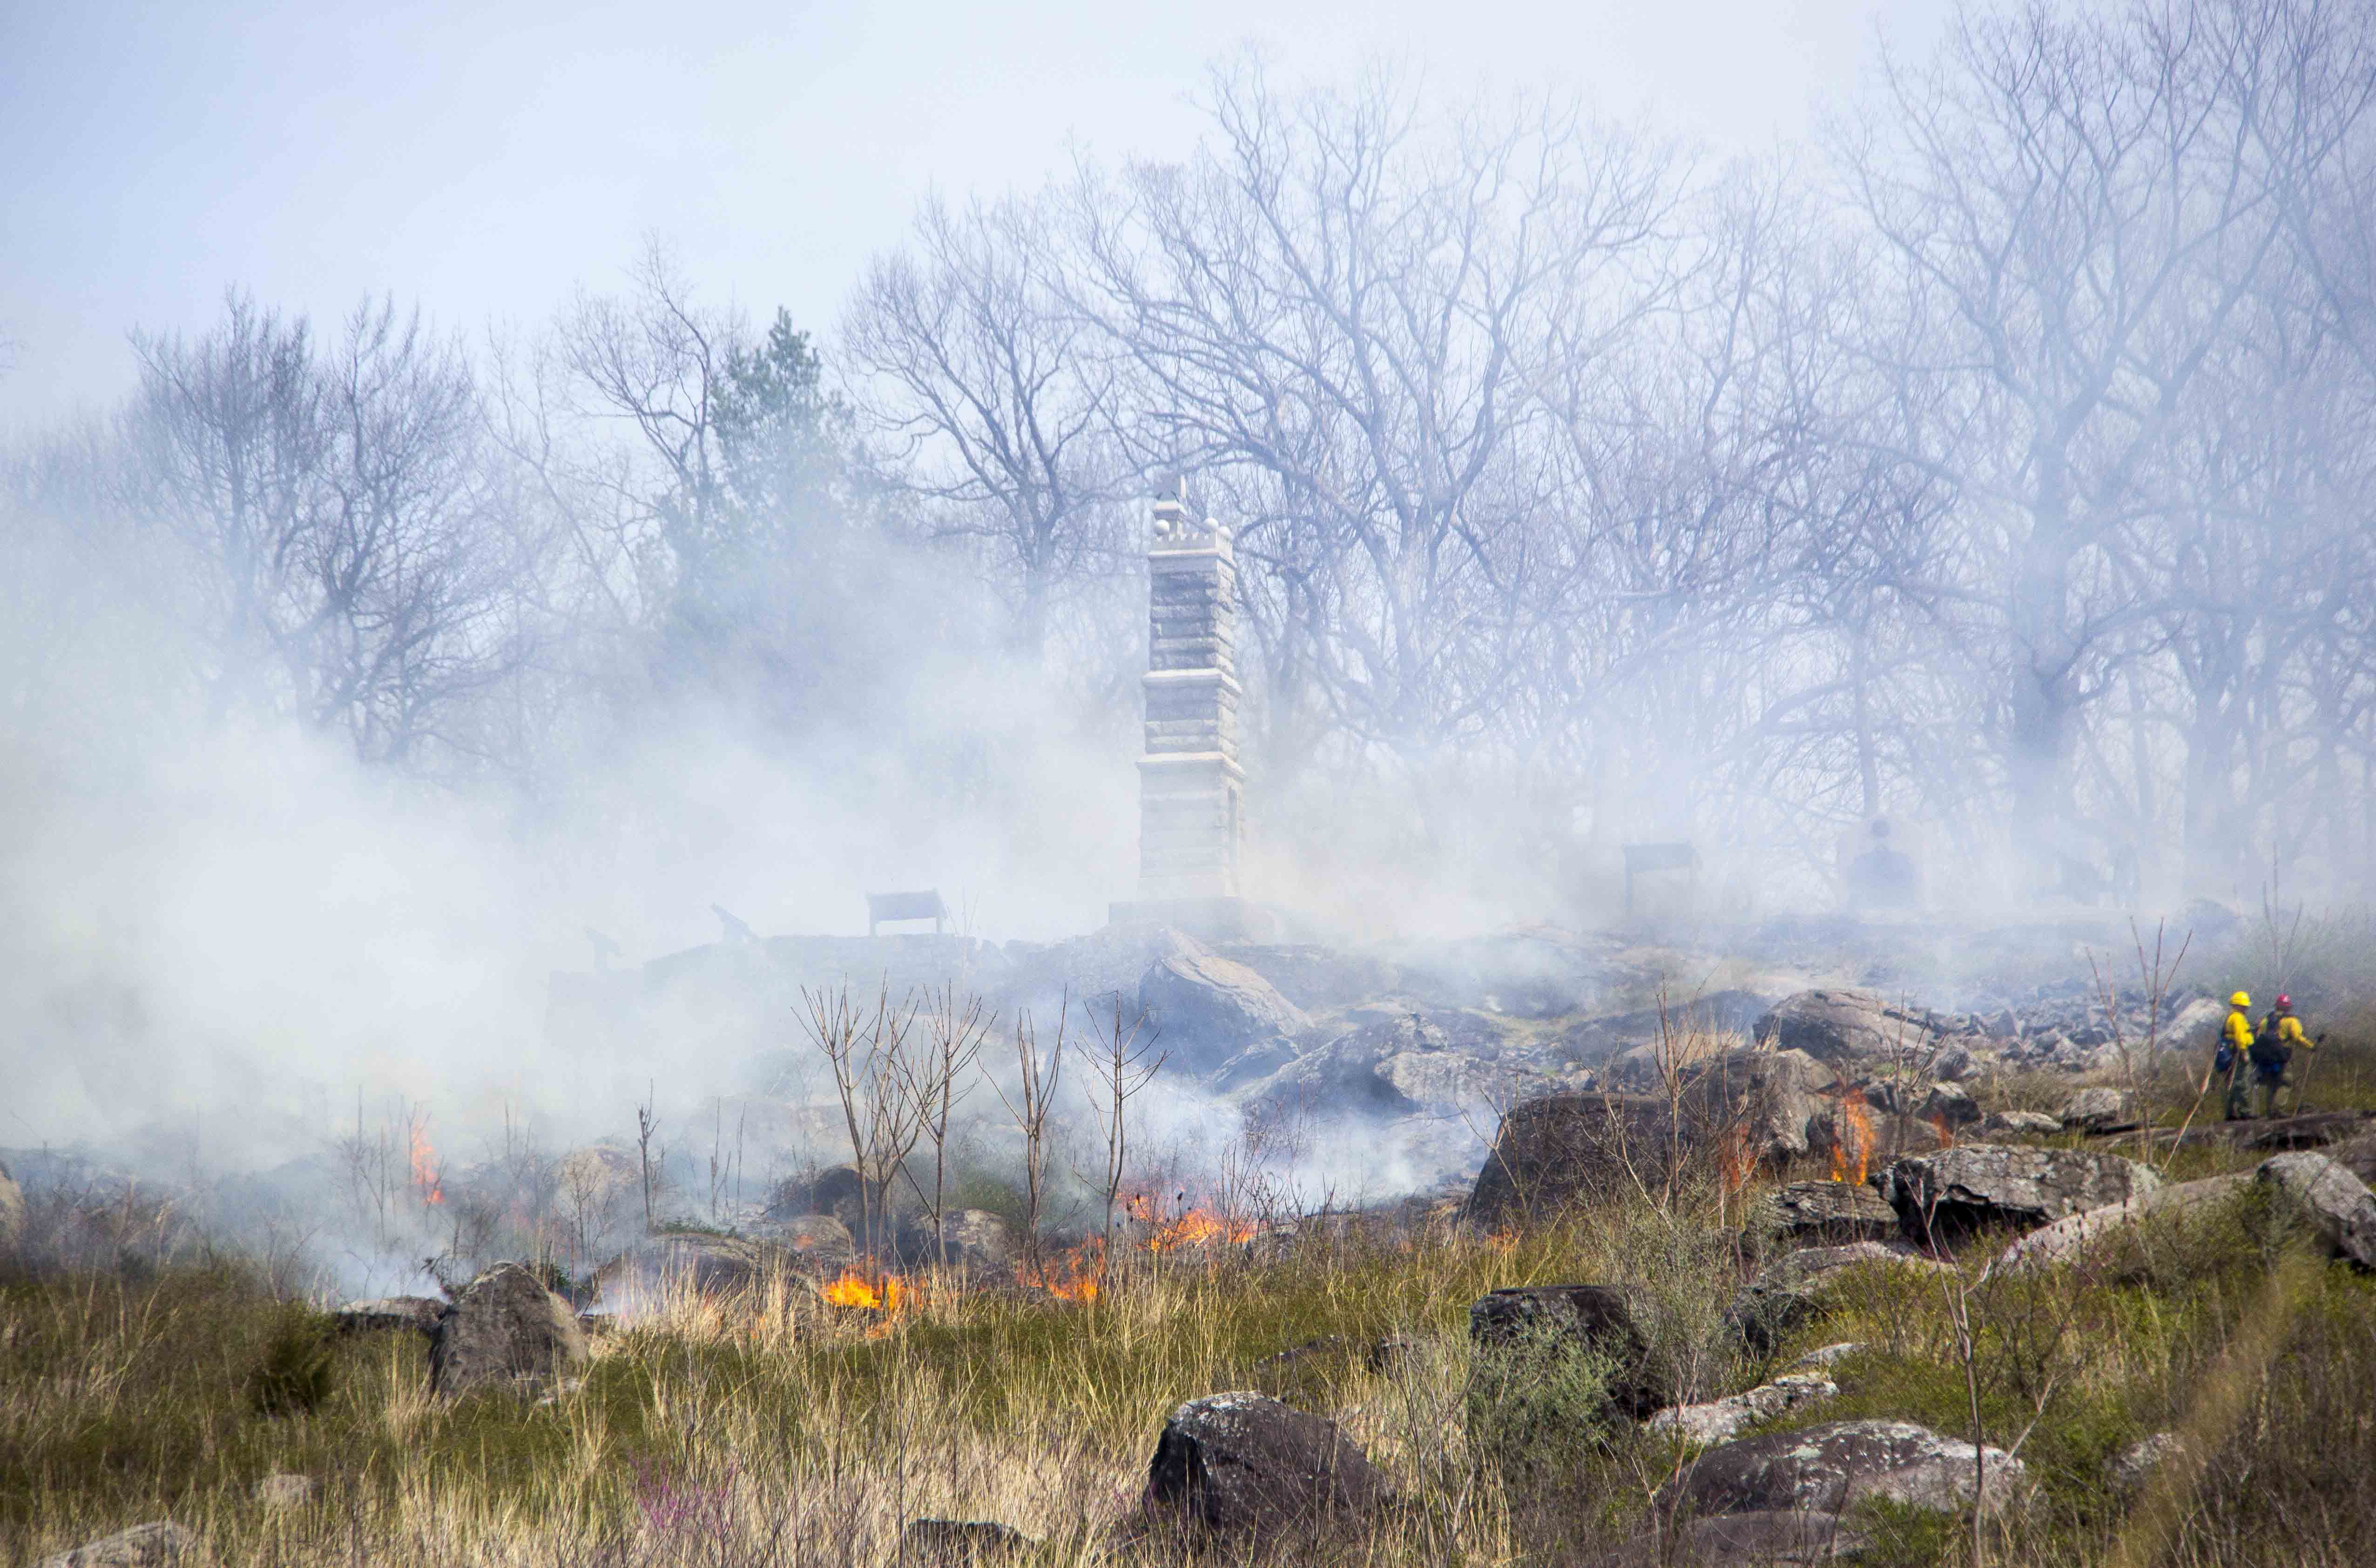 Gettysburg to burn battle sites this month